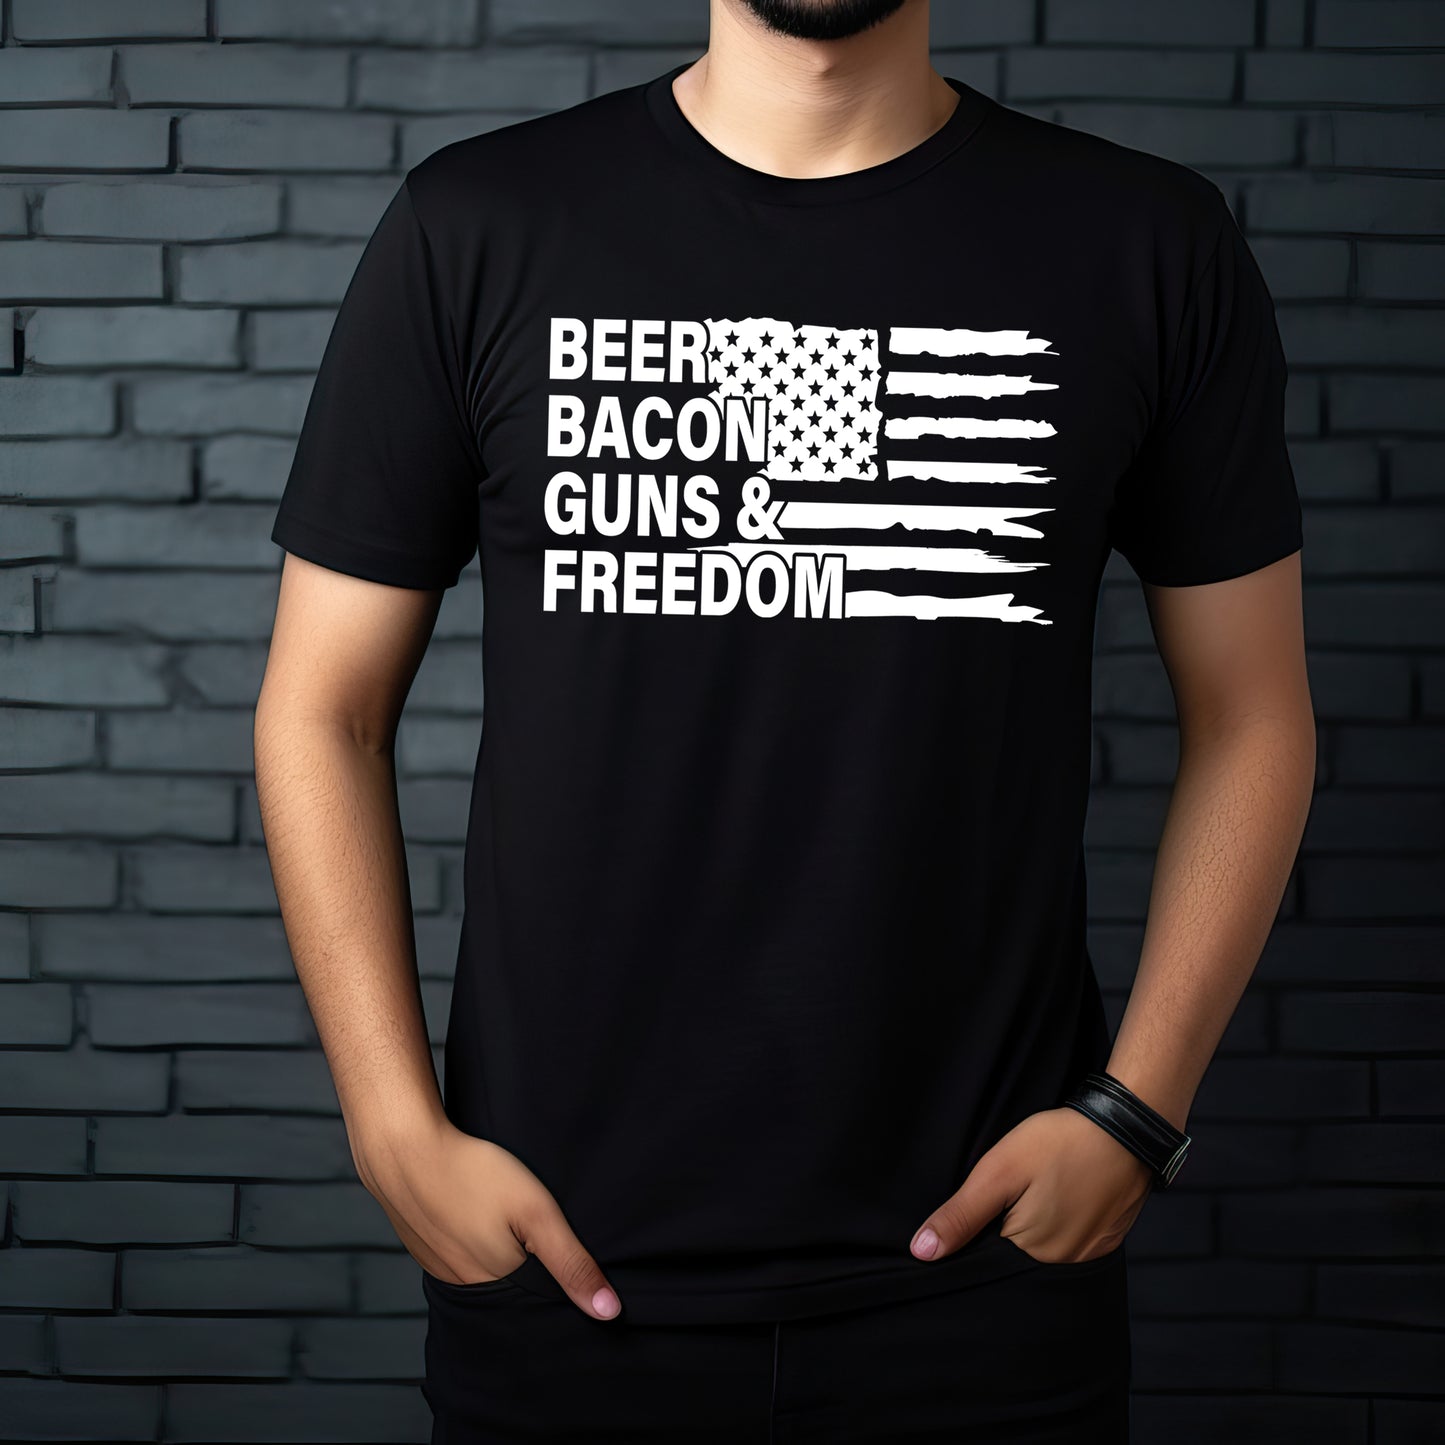 Beer Bacon Guns & Freedom- Single Color (white)- 11.5" wide Plastisol Screen Print Transfer